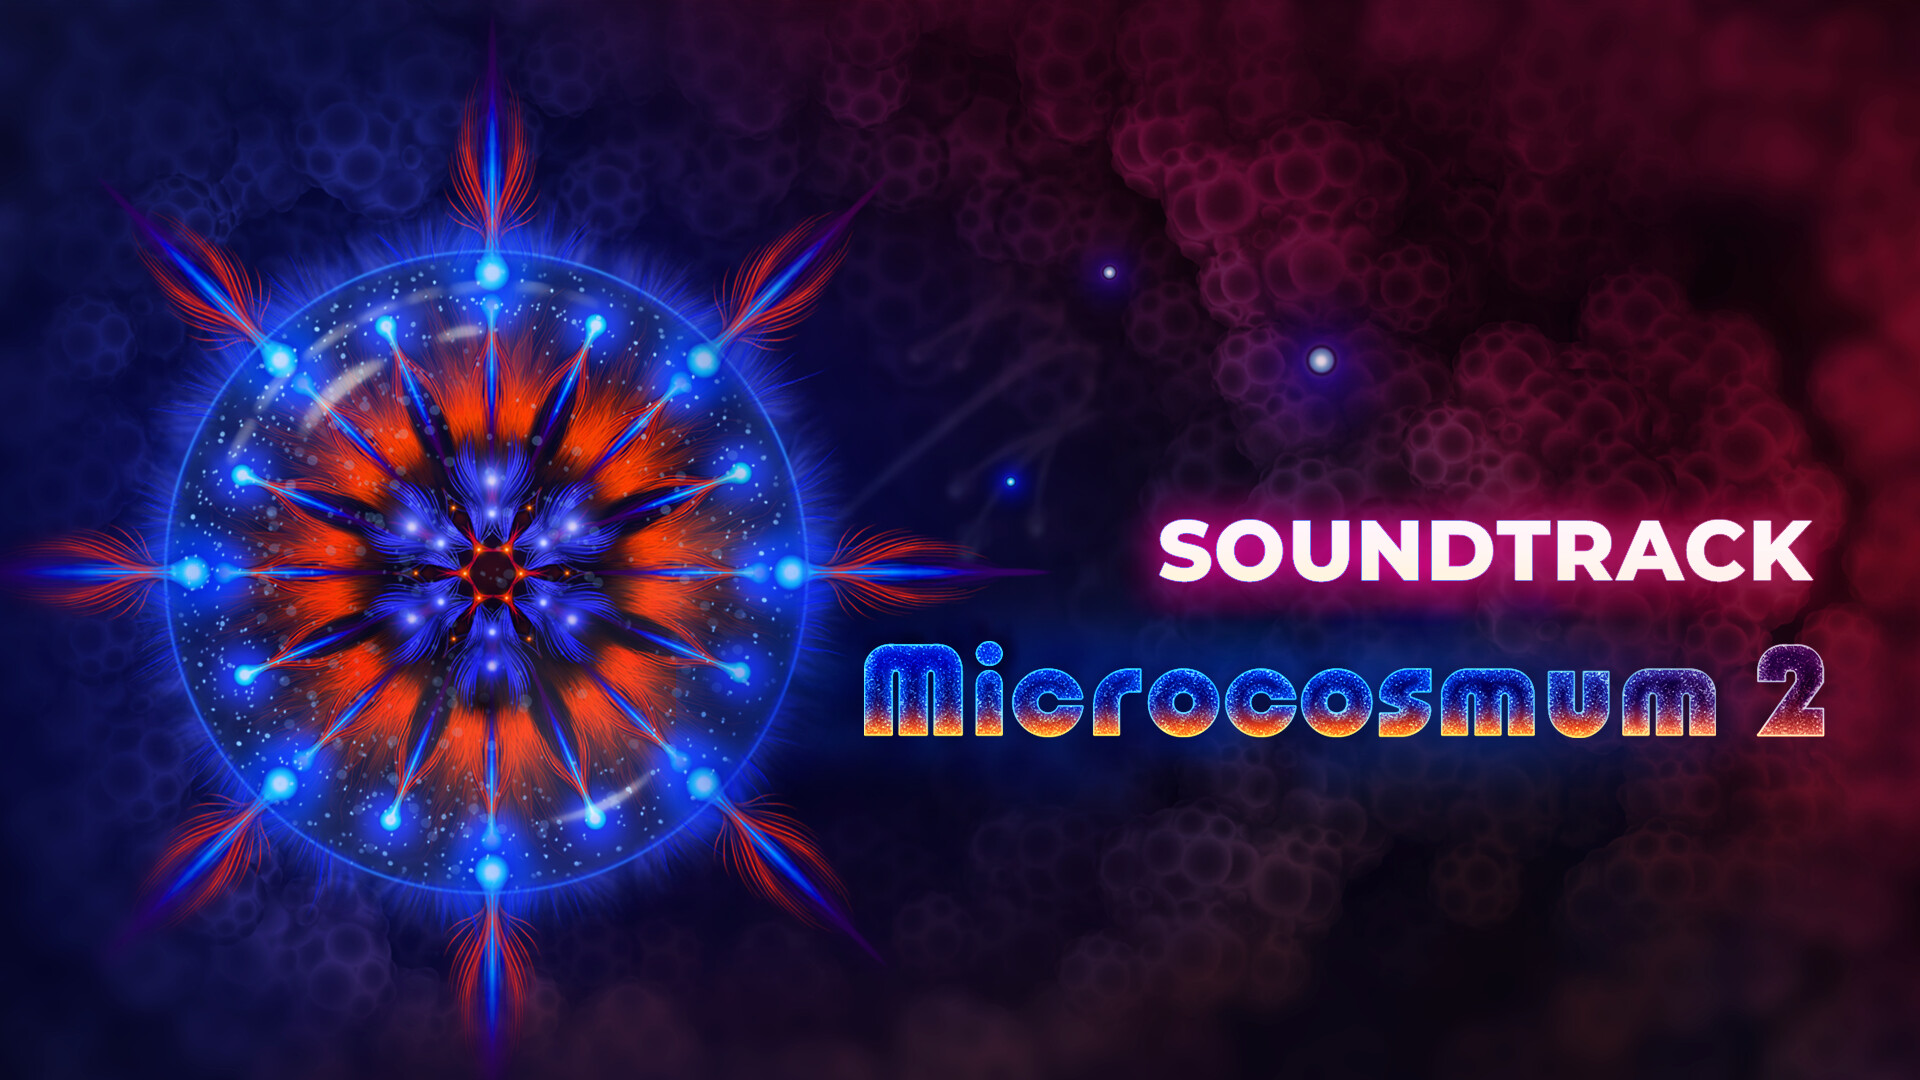 Microcosmum 2 - Soundtrack Featured Screenshot #1